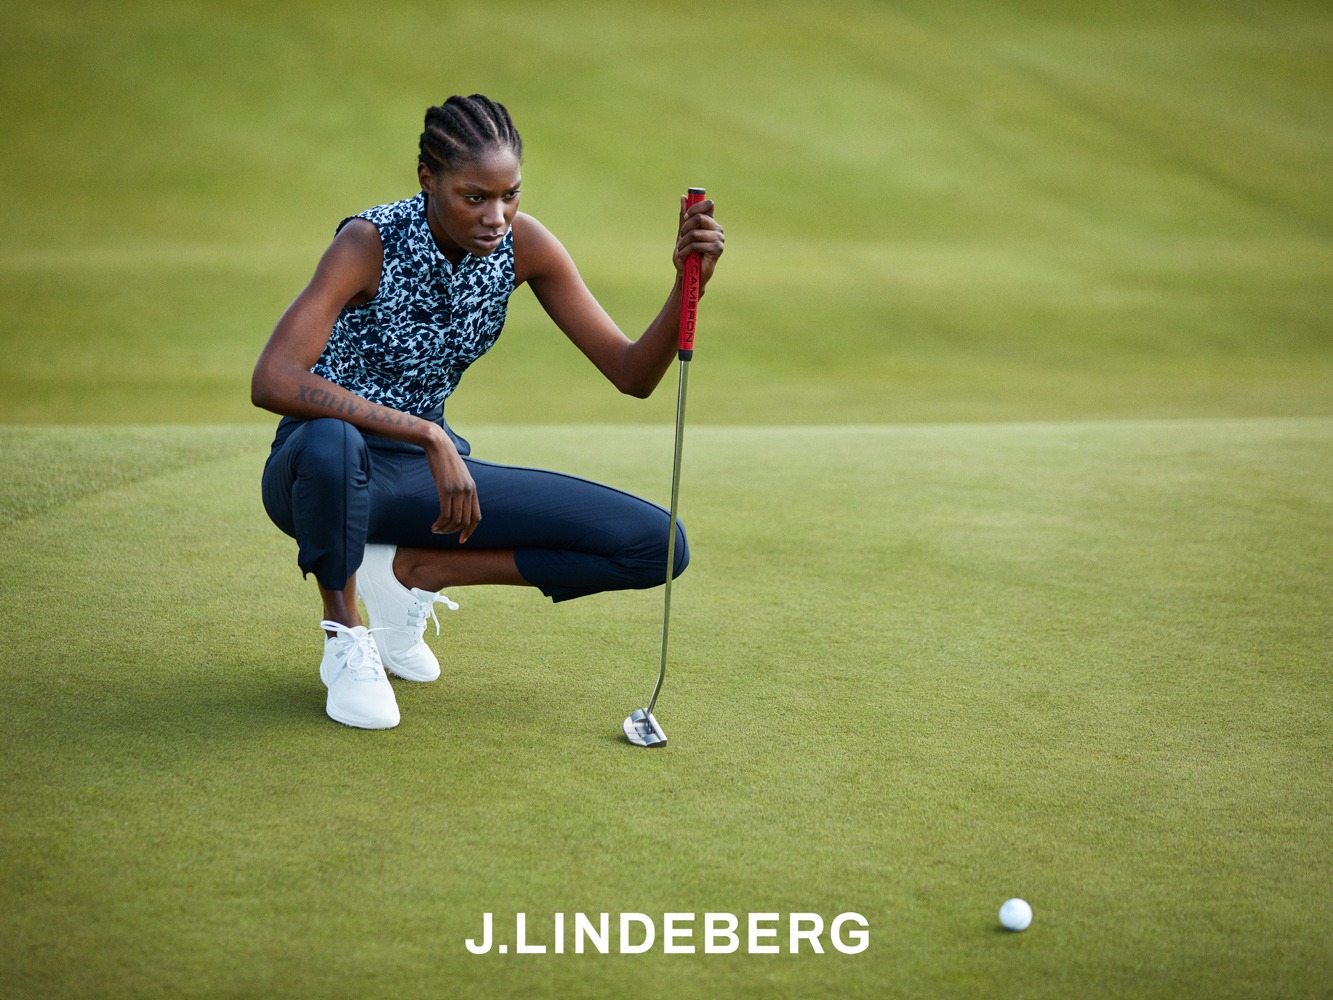 J Lindeberg Golf 2 by Pelle LANNEFORS